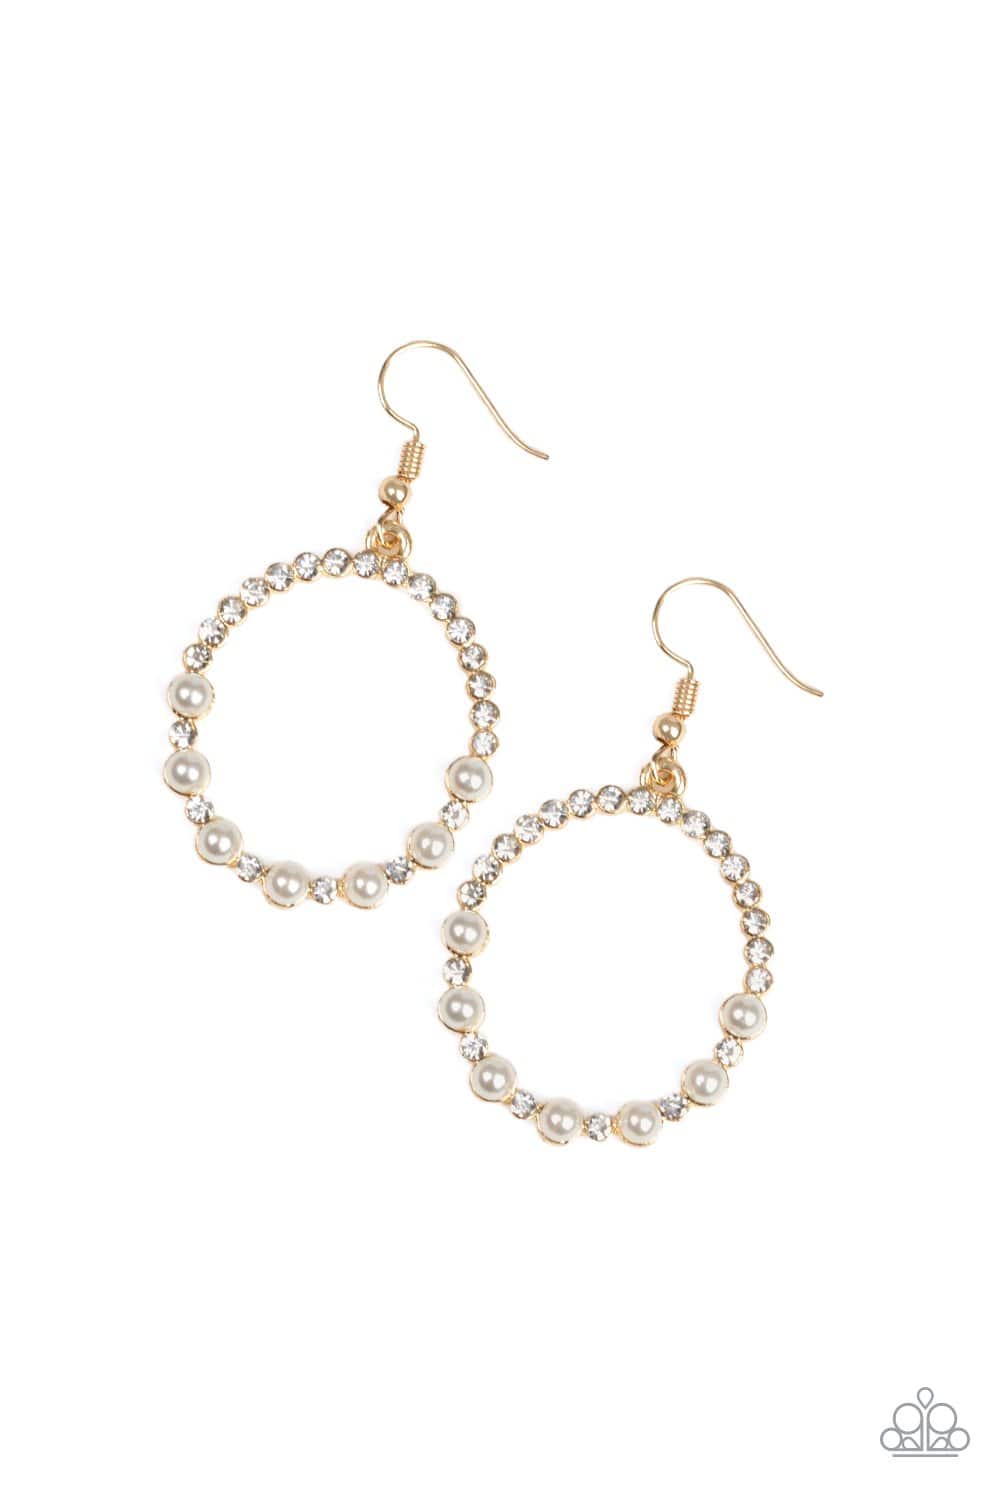 Glowing Grandeur - Gold Pearl & Rhinestone Earrings - Paparazzi Accessories - GlaMarous Titi Jewels